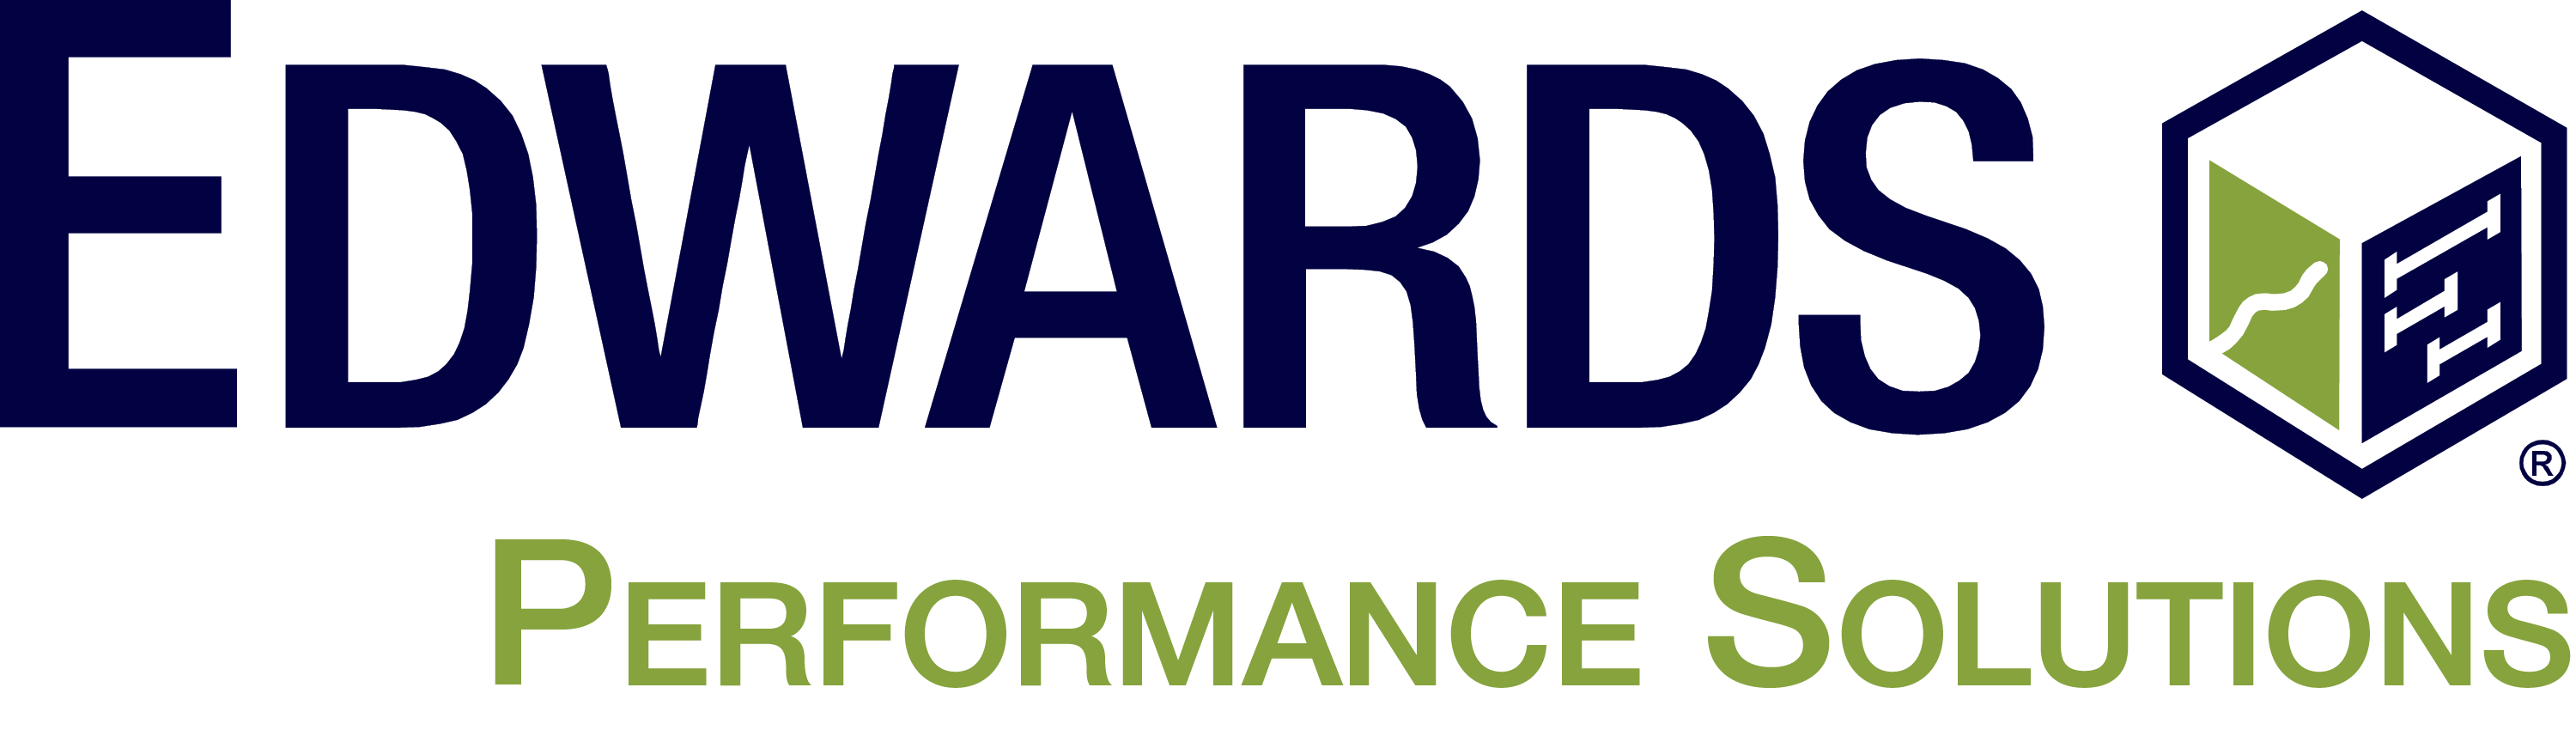 Edwards Performance Solutions Company Logo